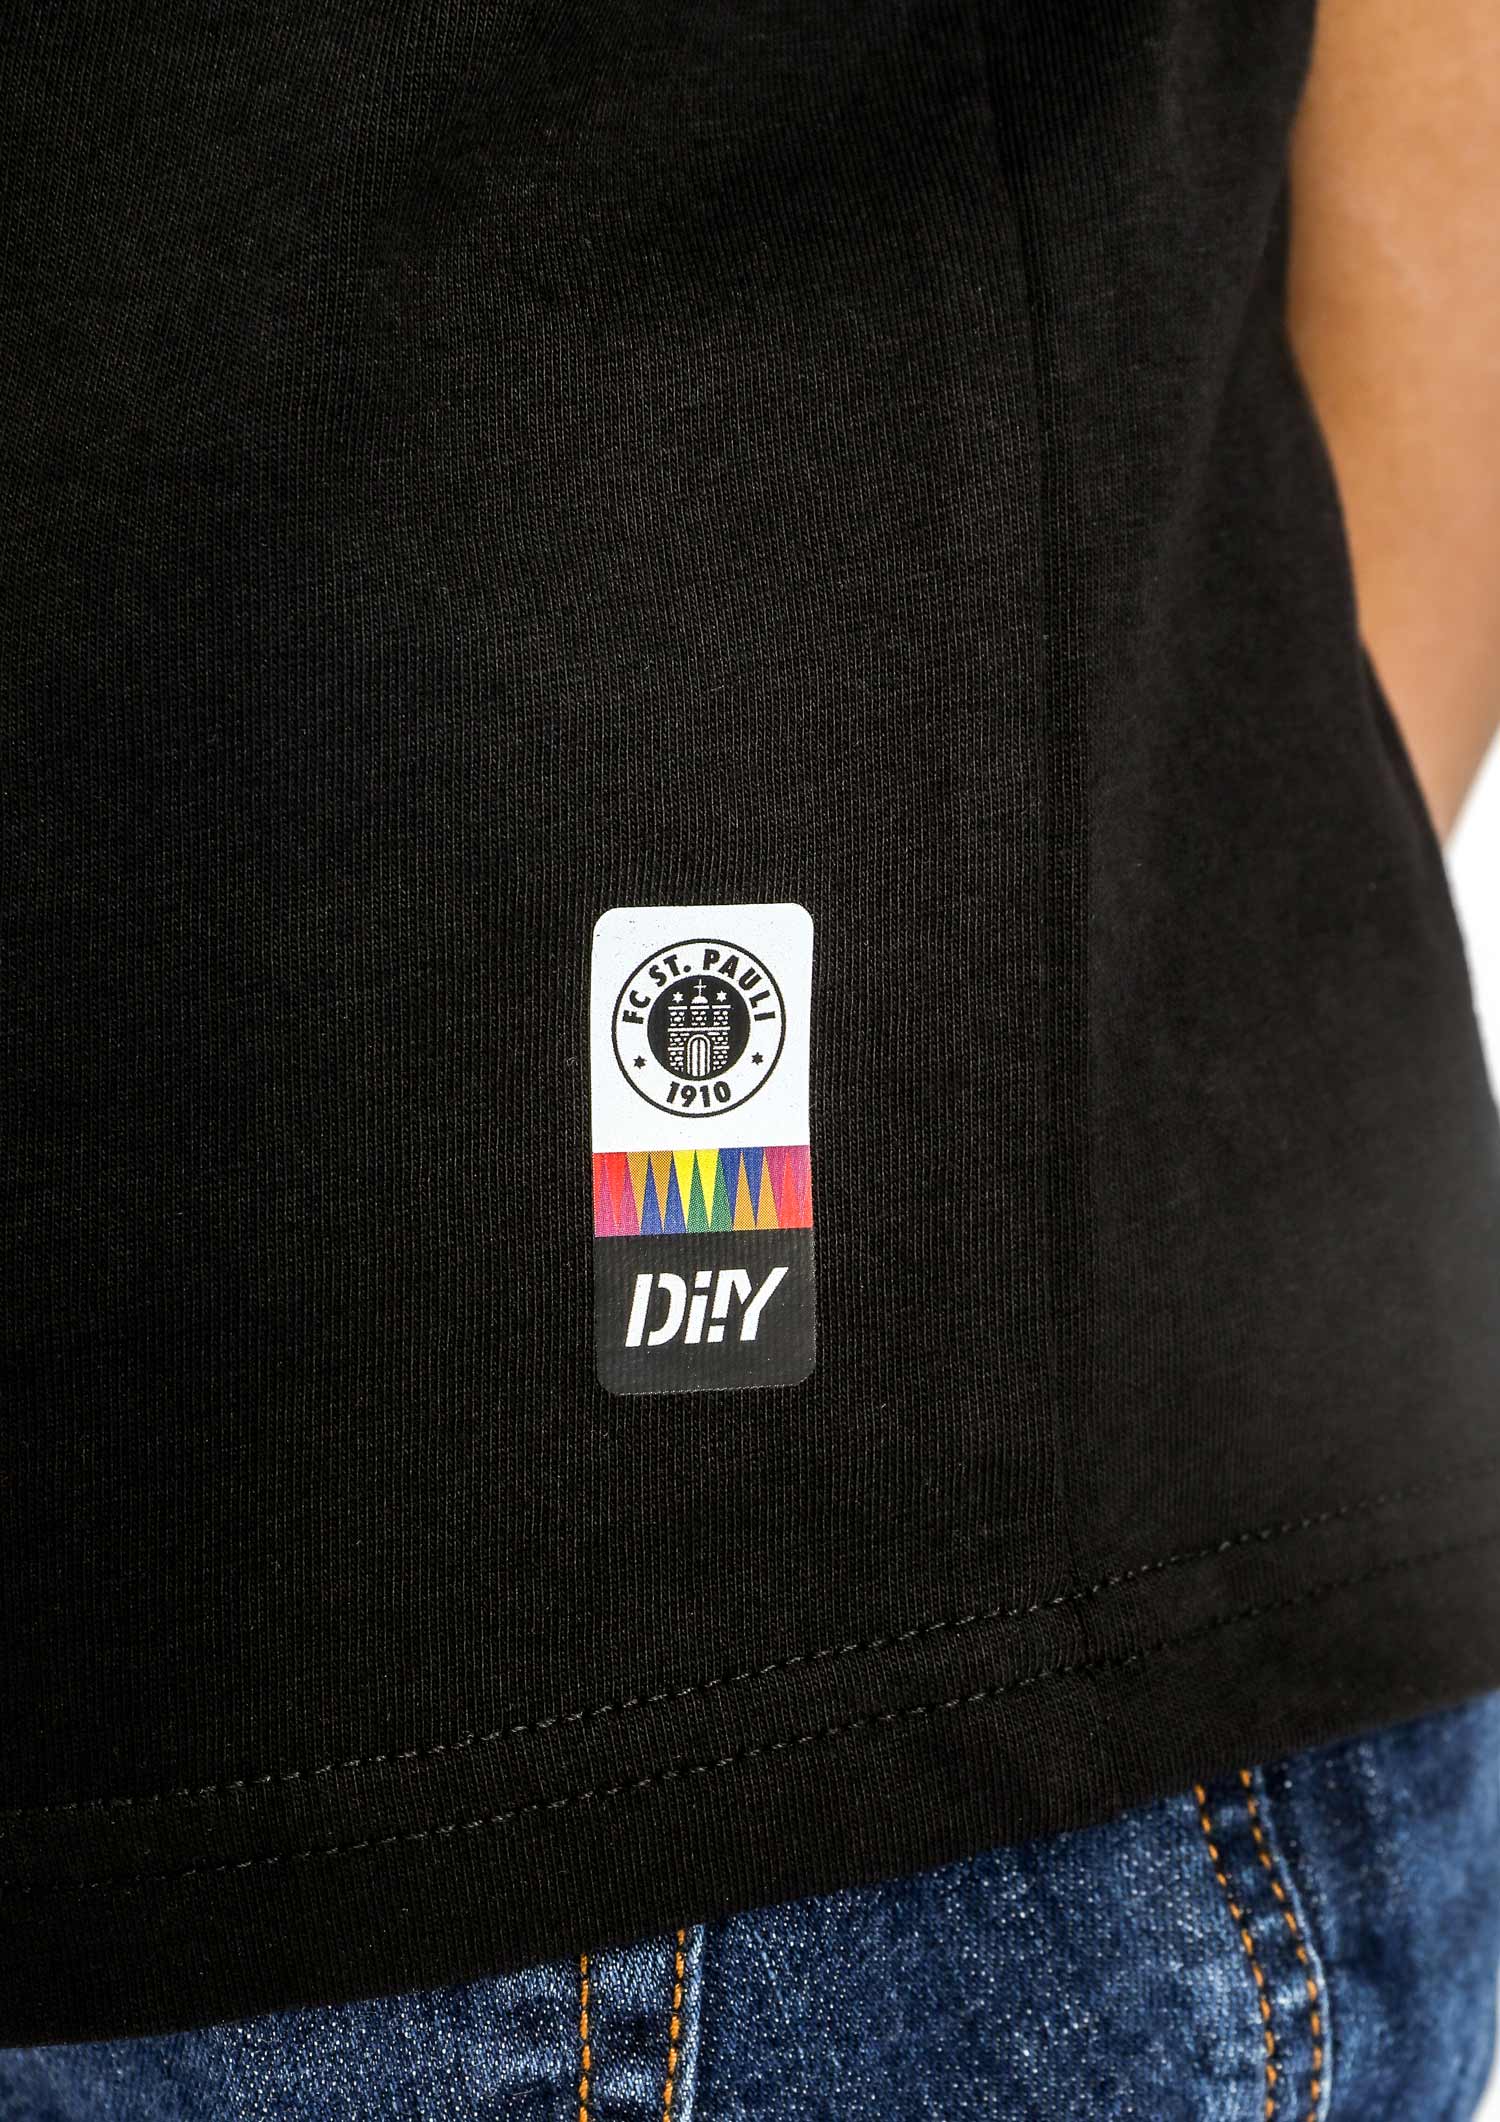 DIIY - Kids Logo T-Shirt 2023-24